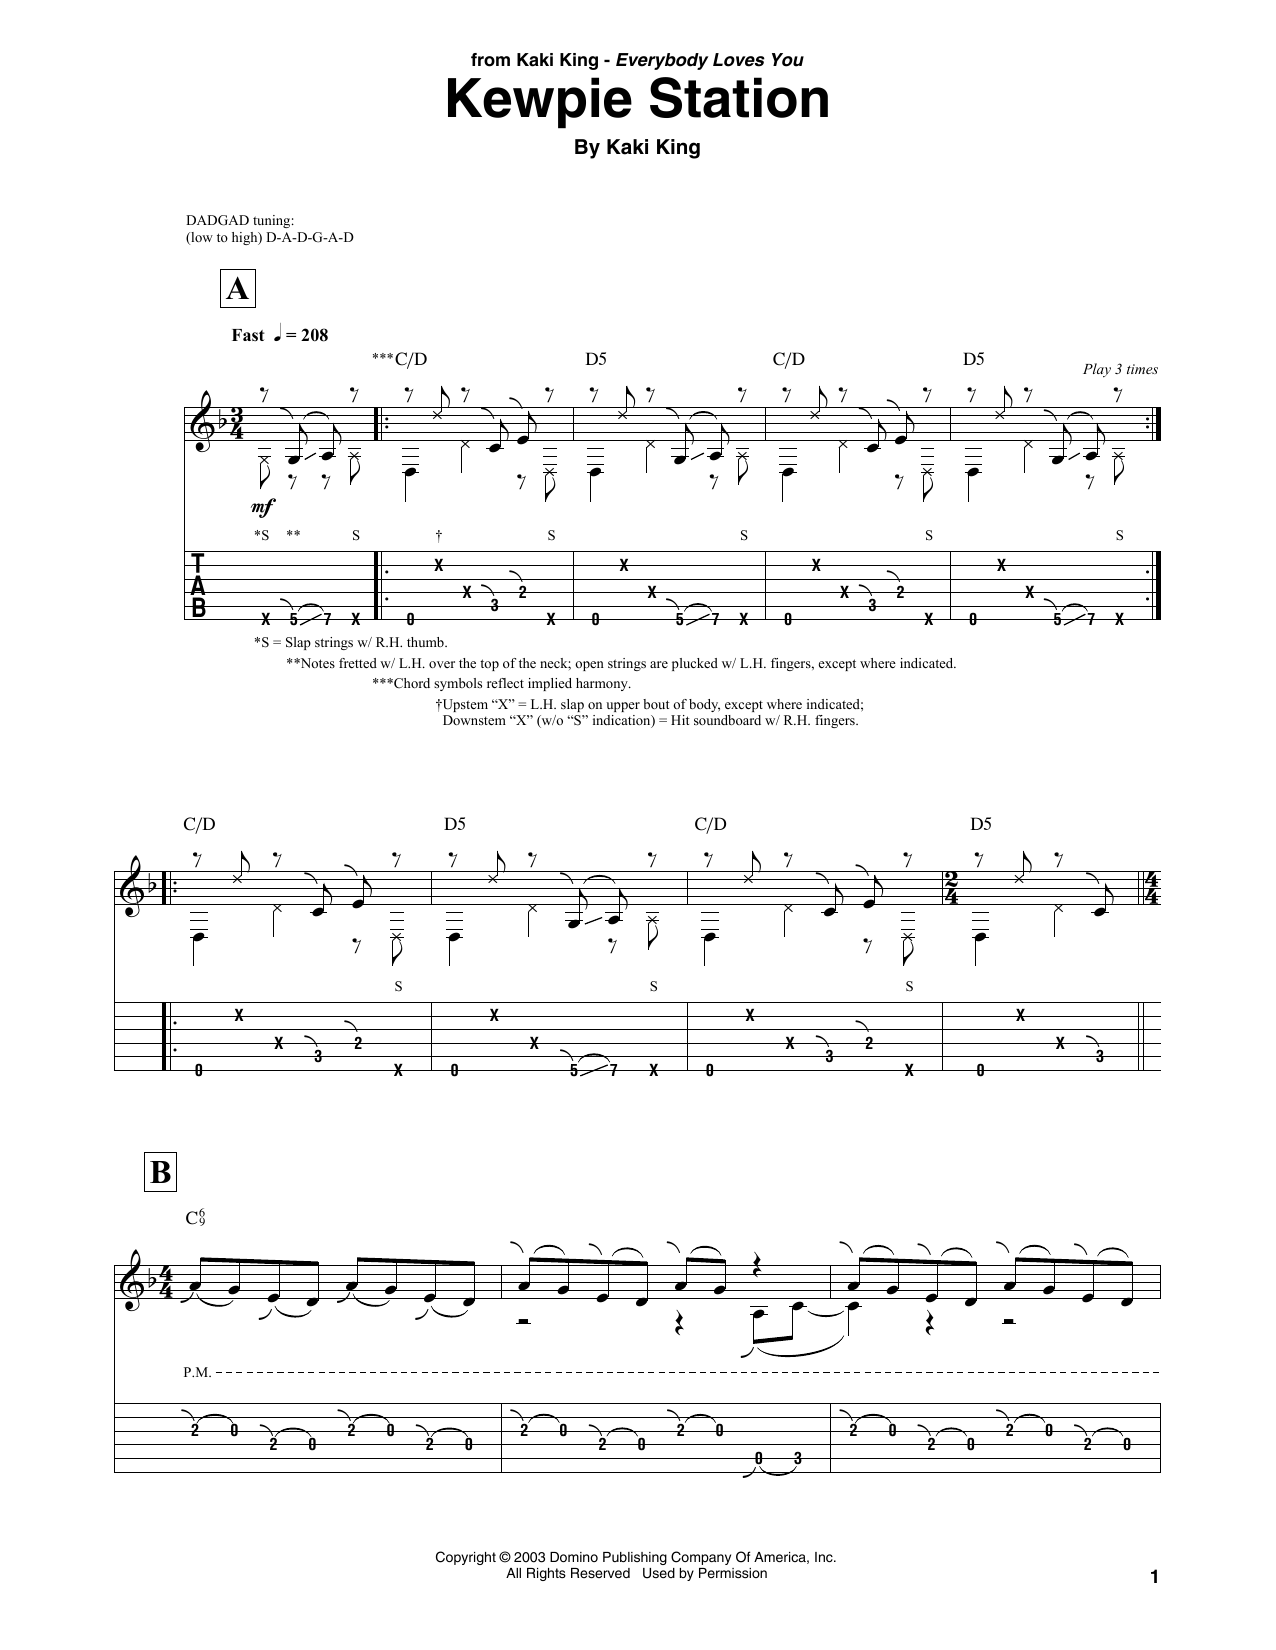 Kaki King Kewpie Station Sheet Music Notes & Chords for Solo Guitar Tab - Download or Print PDF